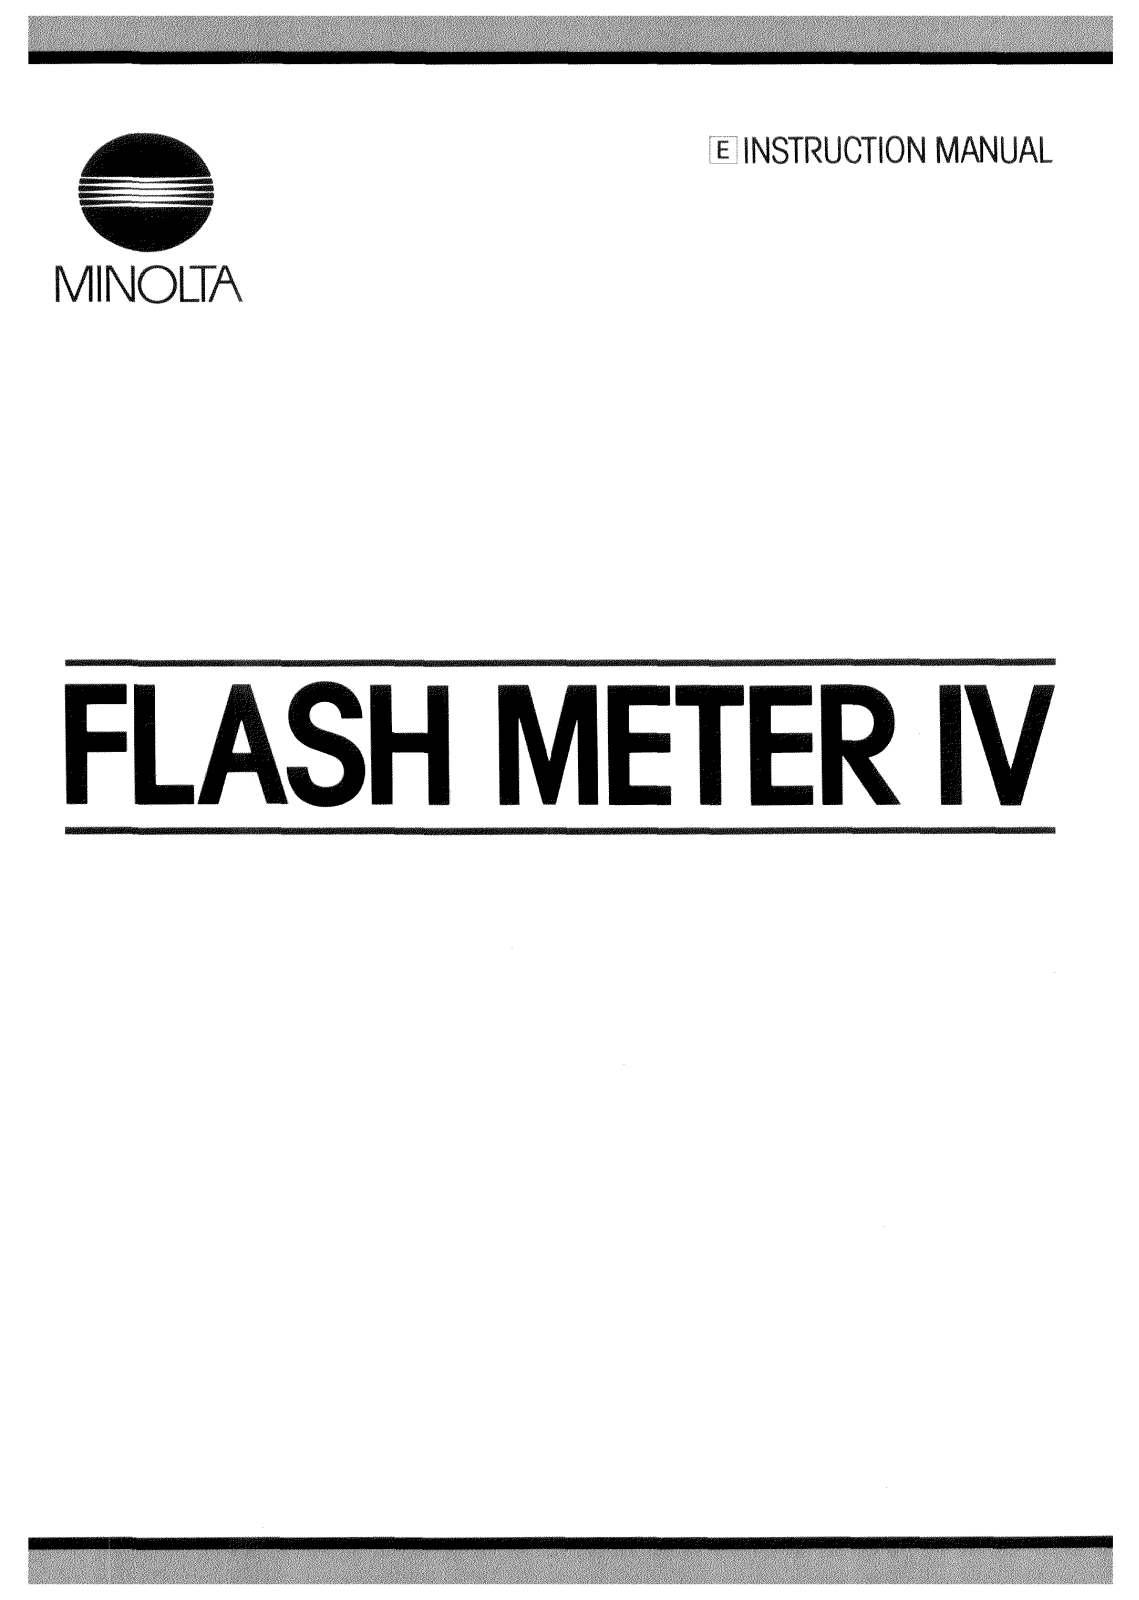 Minolta FLASH METER IV user Manual